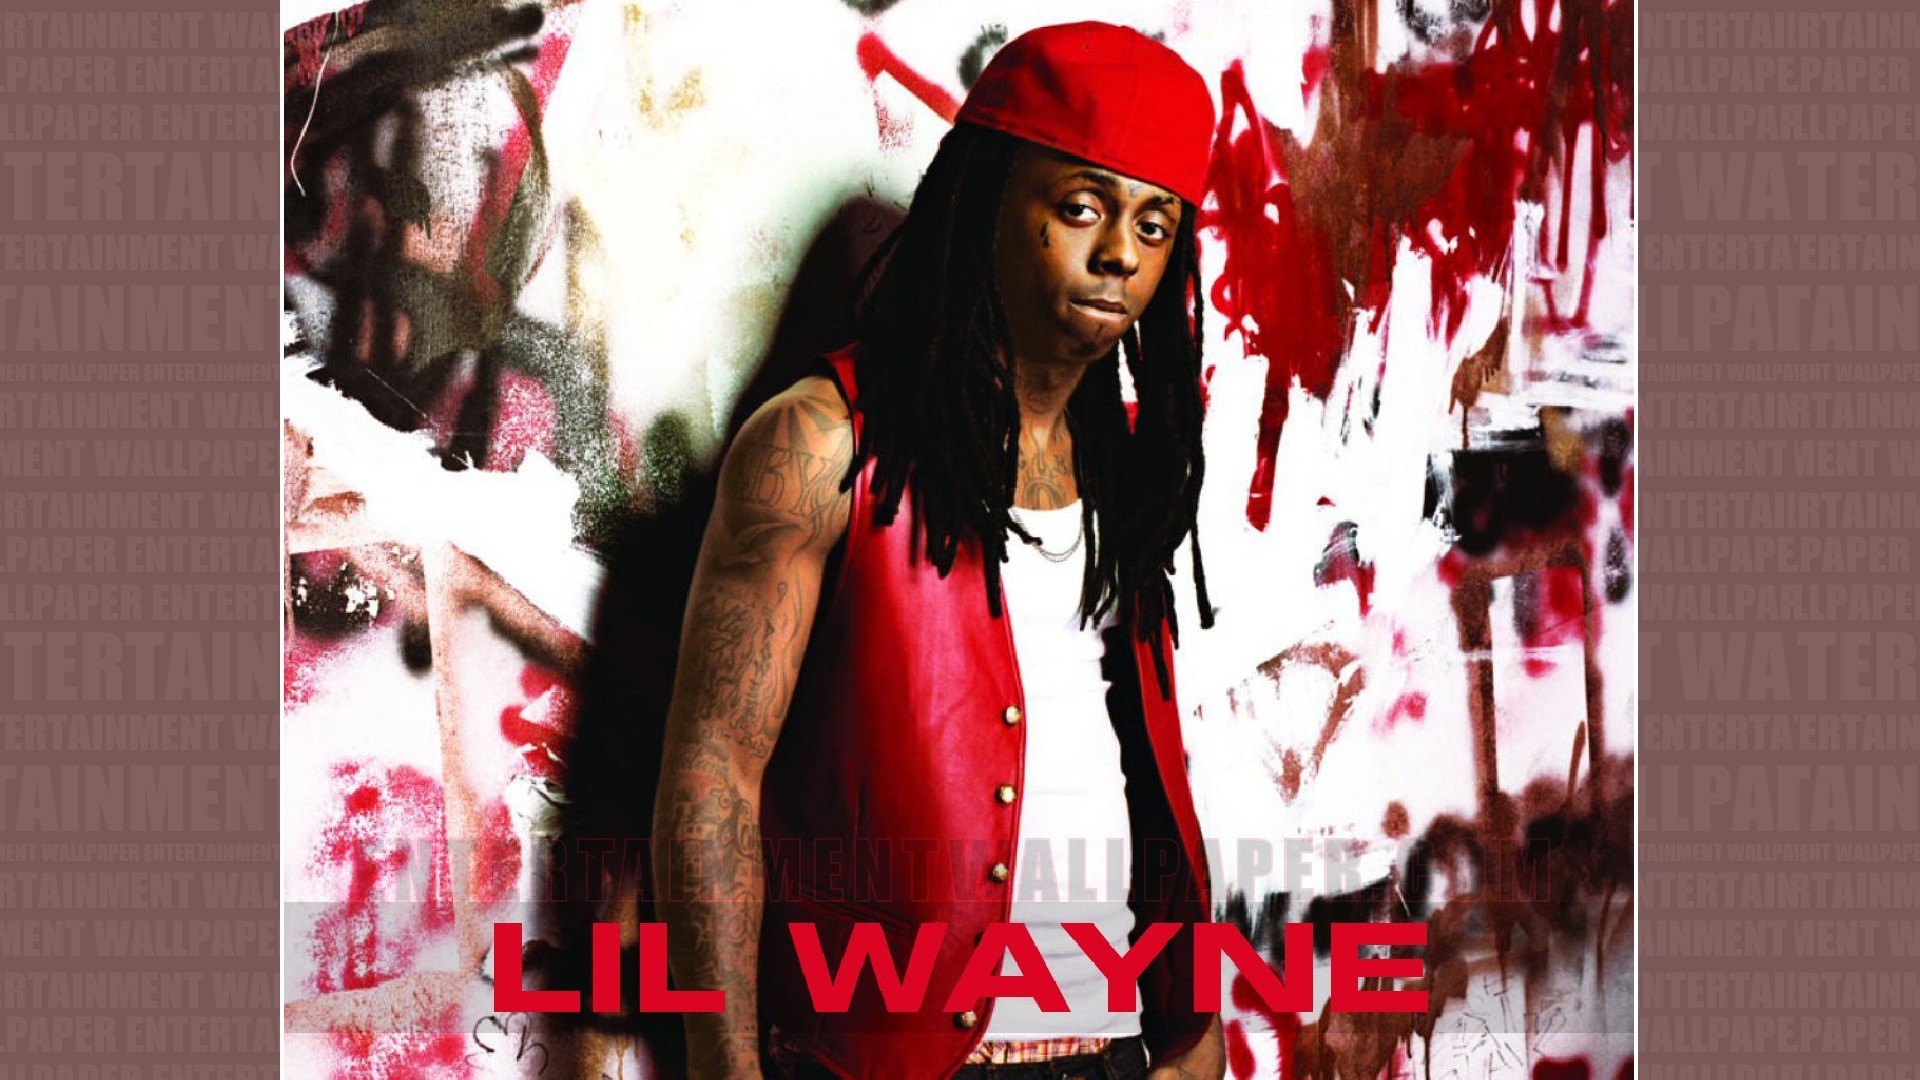 Lil Wayne Wallpaper – Original size, download now